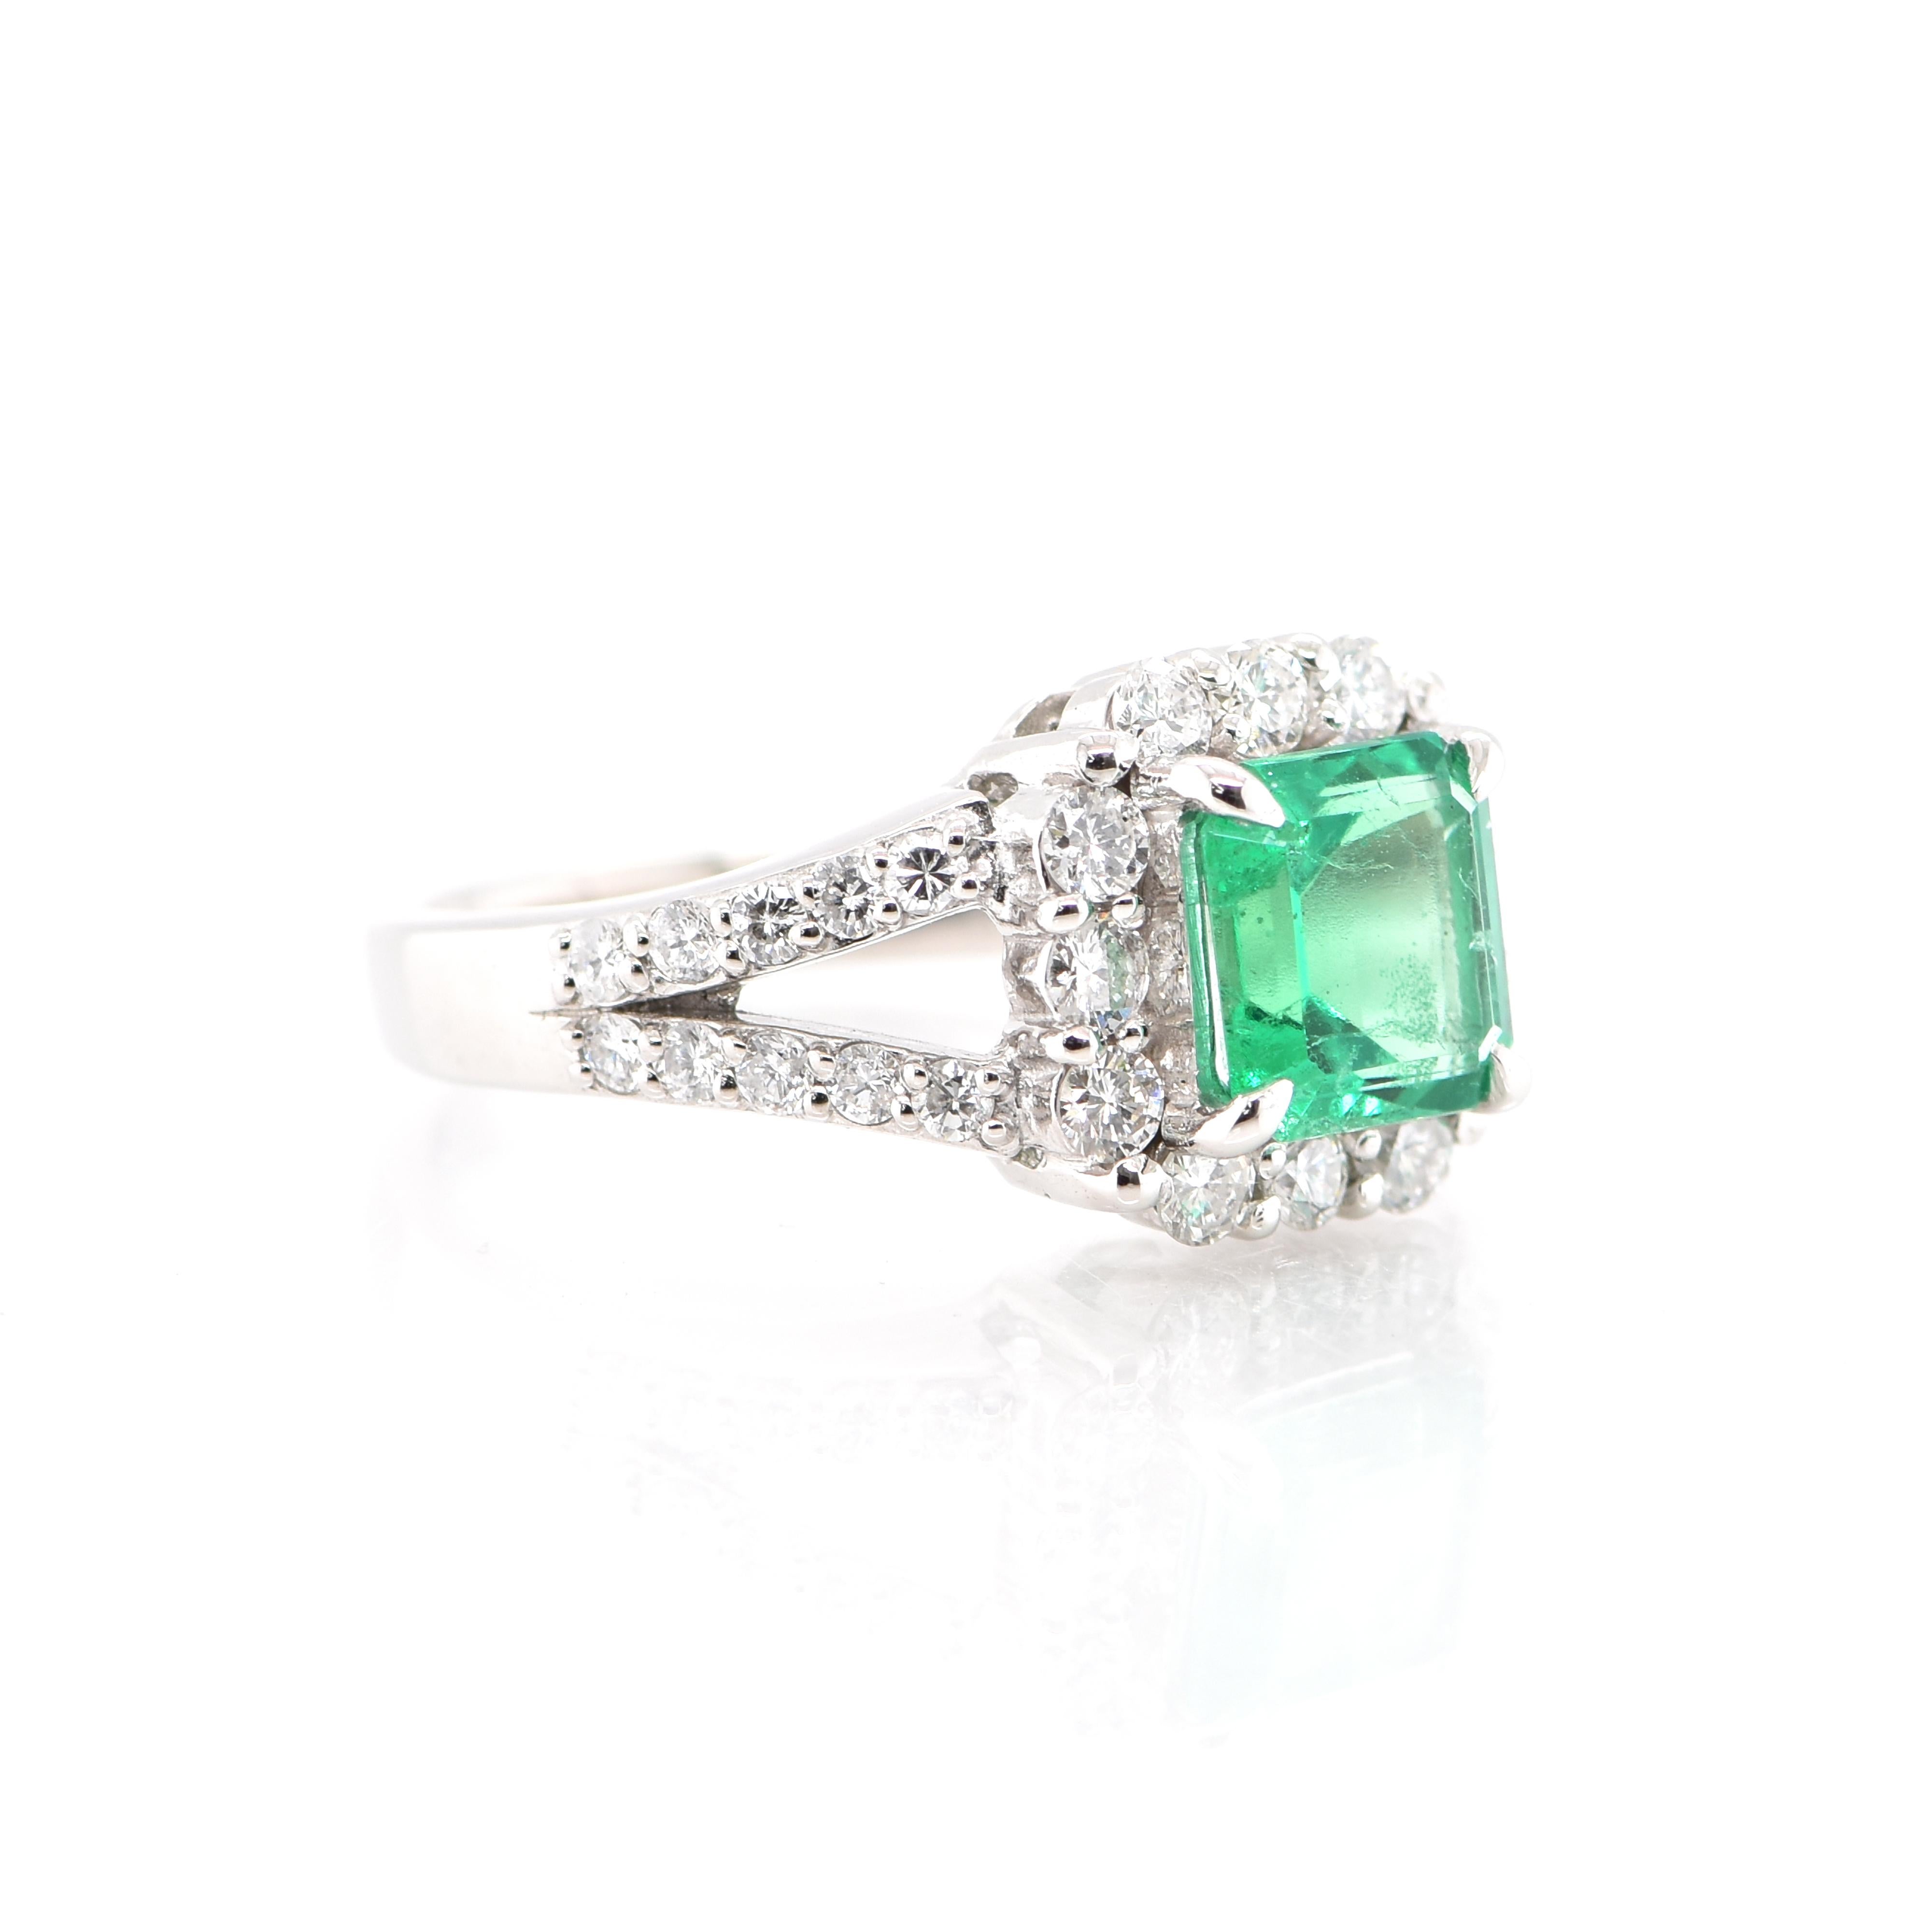 Modern 1.546 Carat Natural Emerald and Diamond Ring Set in Platinum